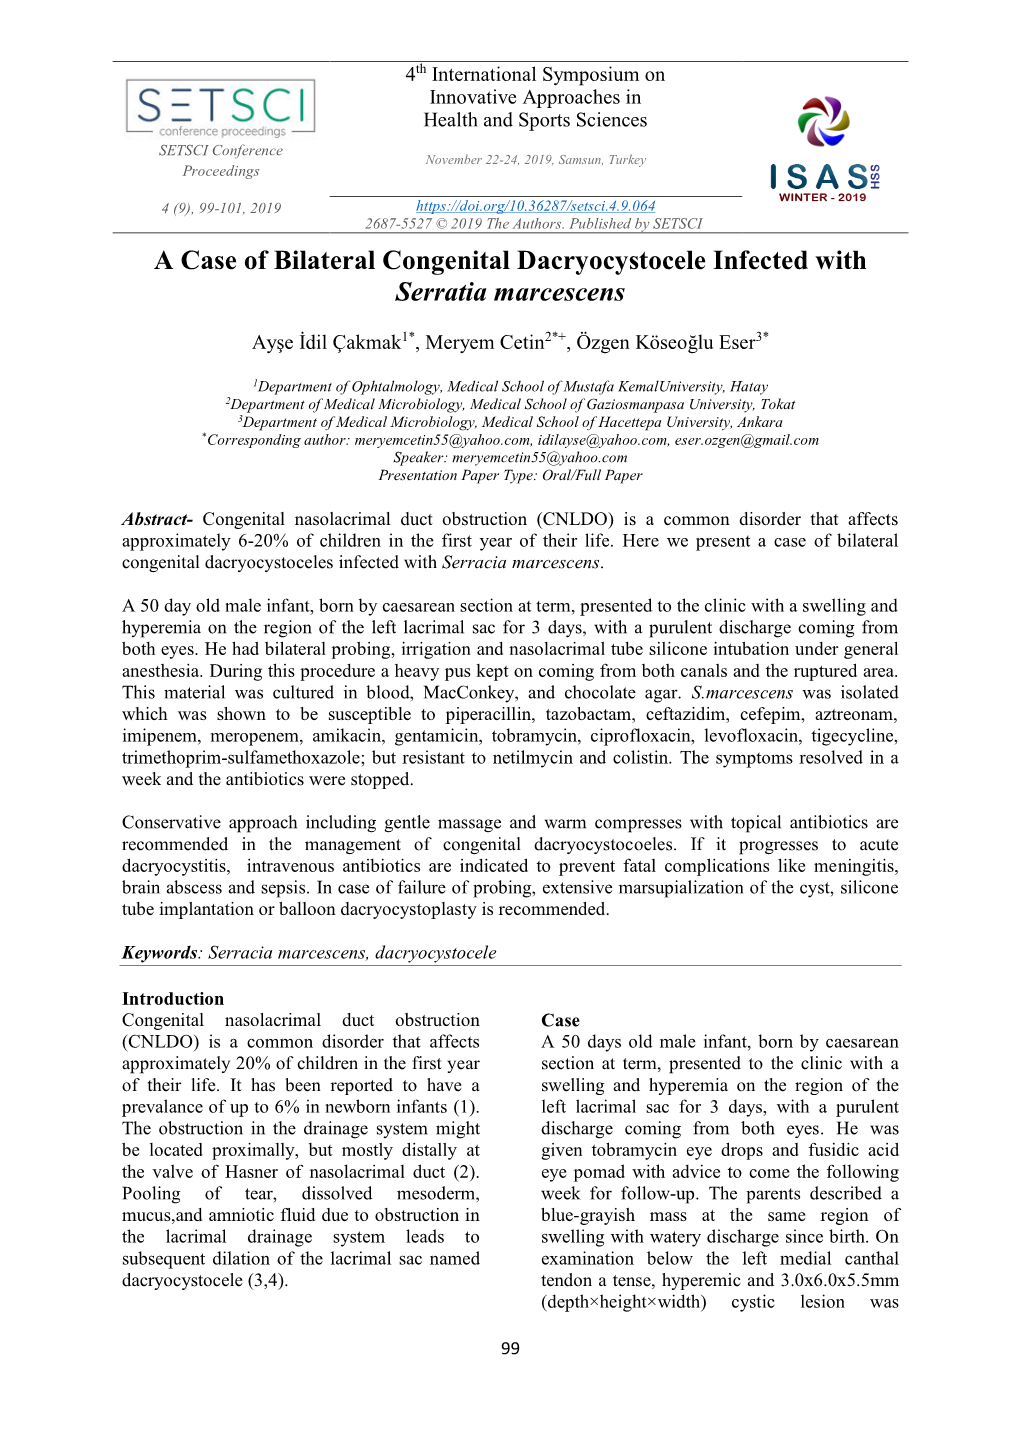 A Case of Bilateral Congenital Dacryocystocele Infected with Serratia Marcescens